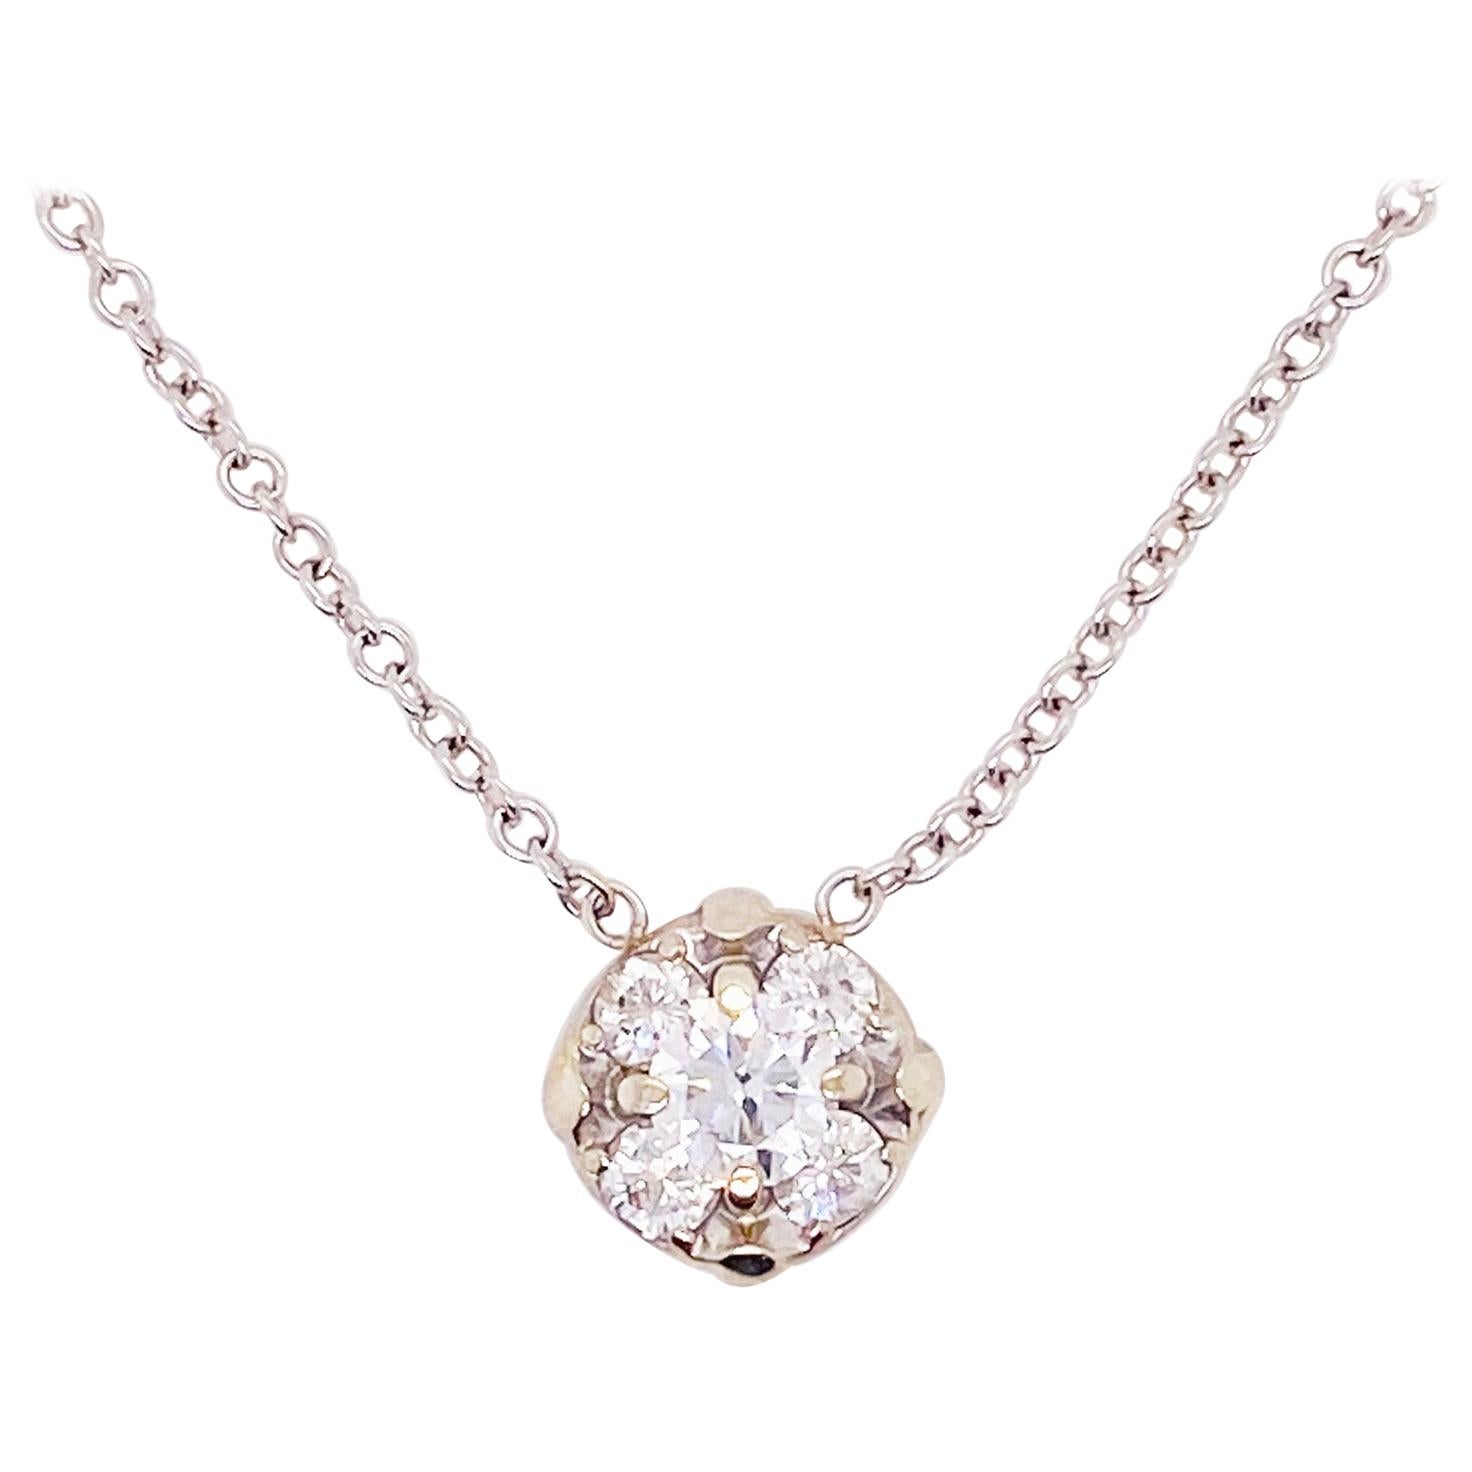 1/2 Carat Diamond Cluster Necklace 14K White Gold .50 ct. Diamond Clover Pendant